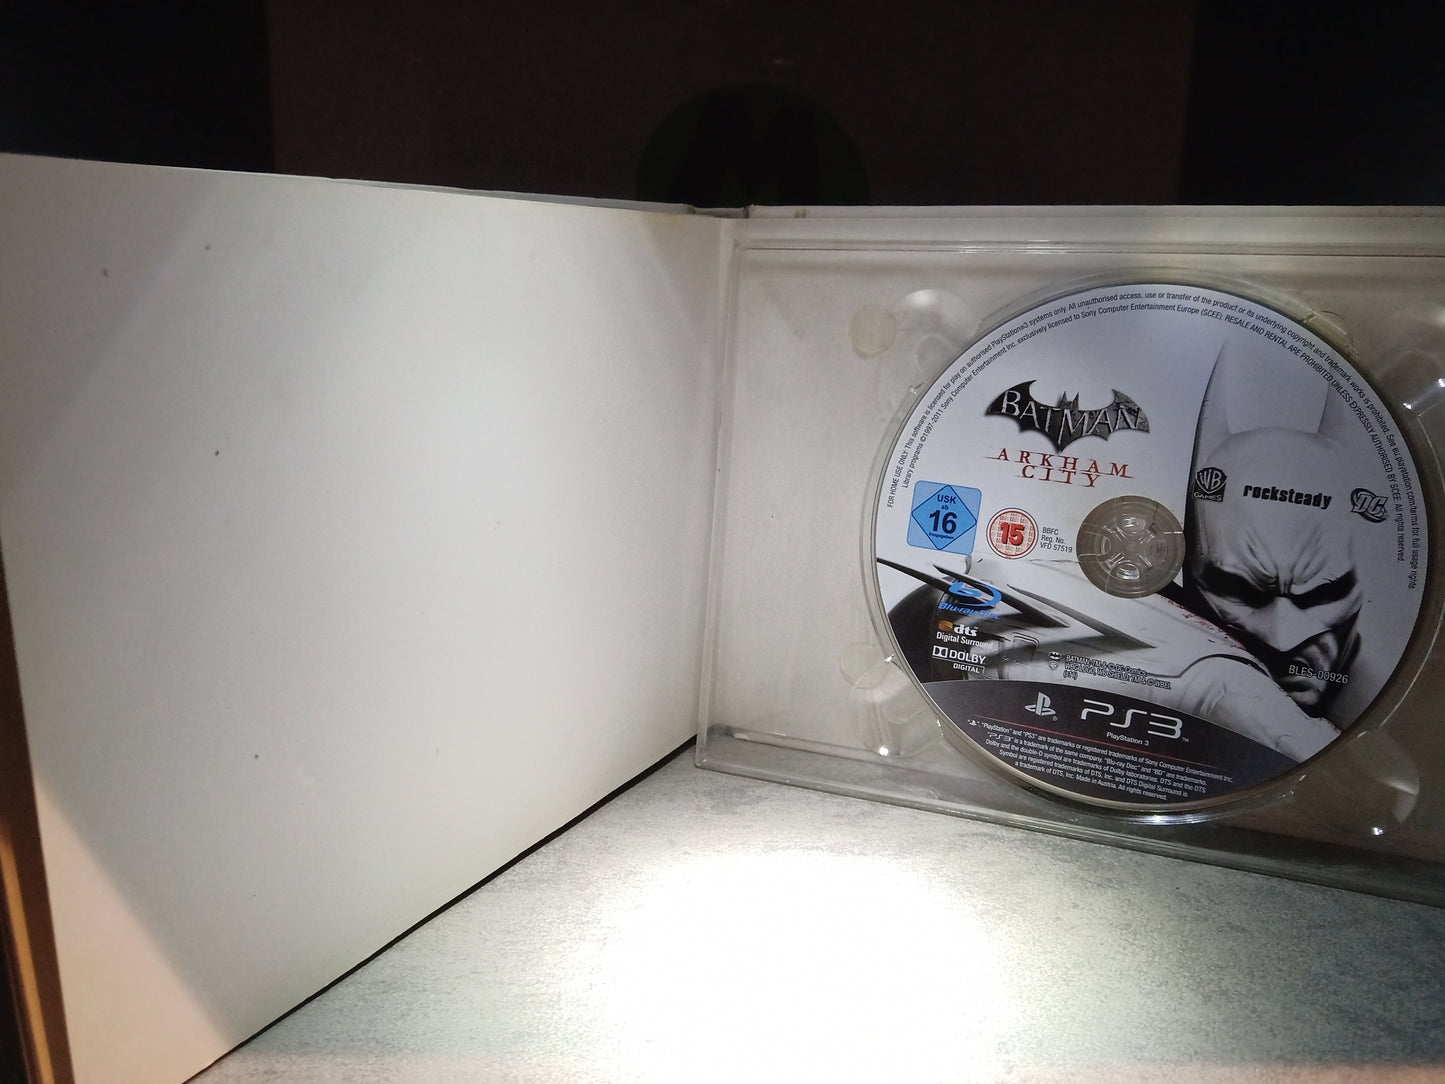 Batman Arkham City Special Edition